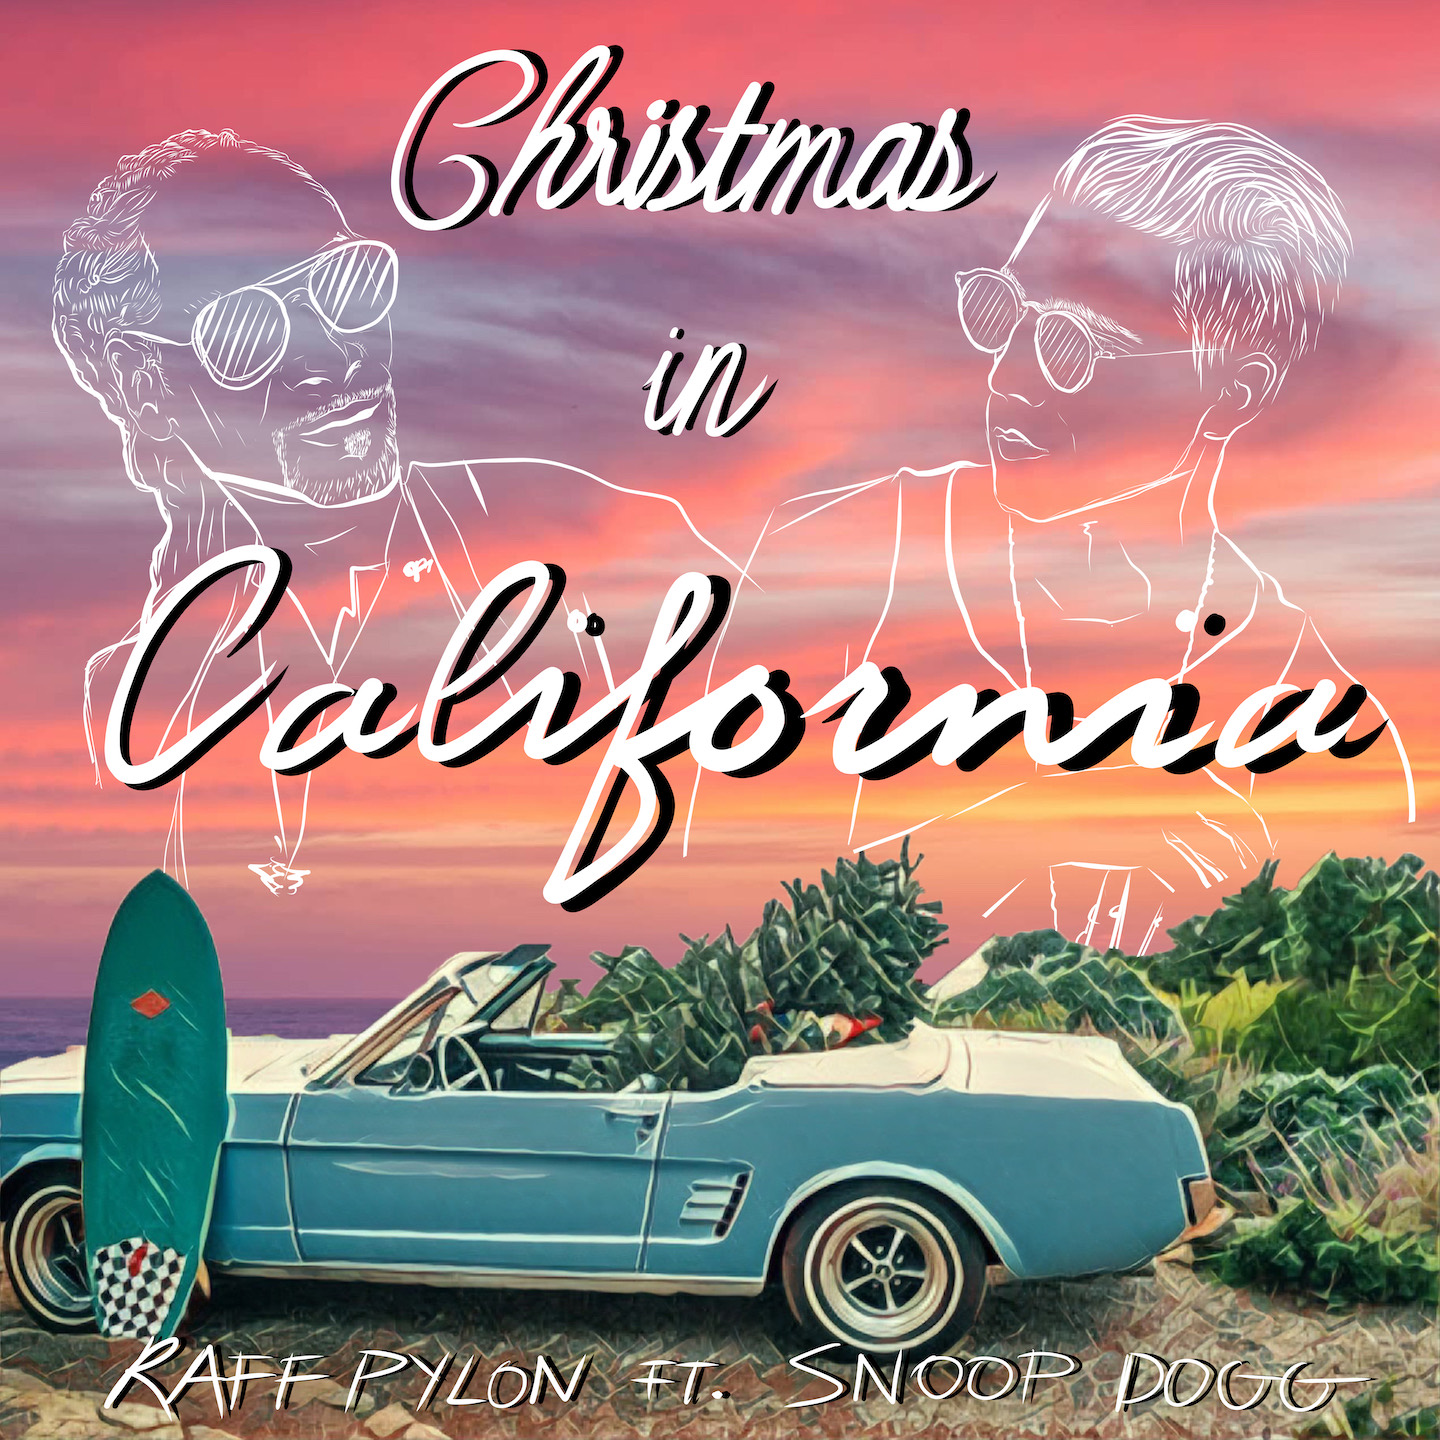 Raff Pylon ft Snoop Dogg - Christmas In California